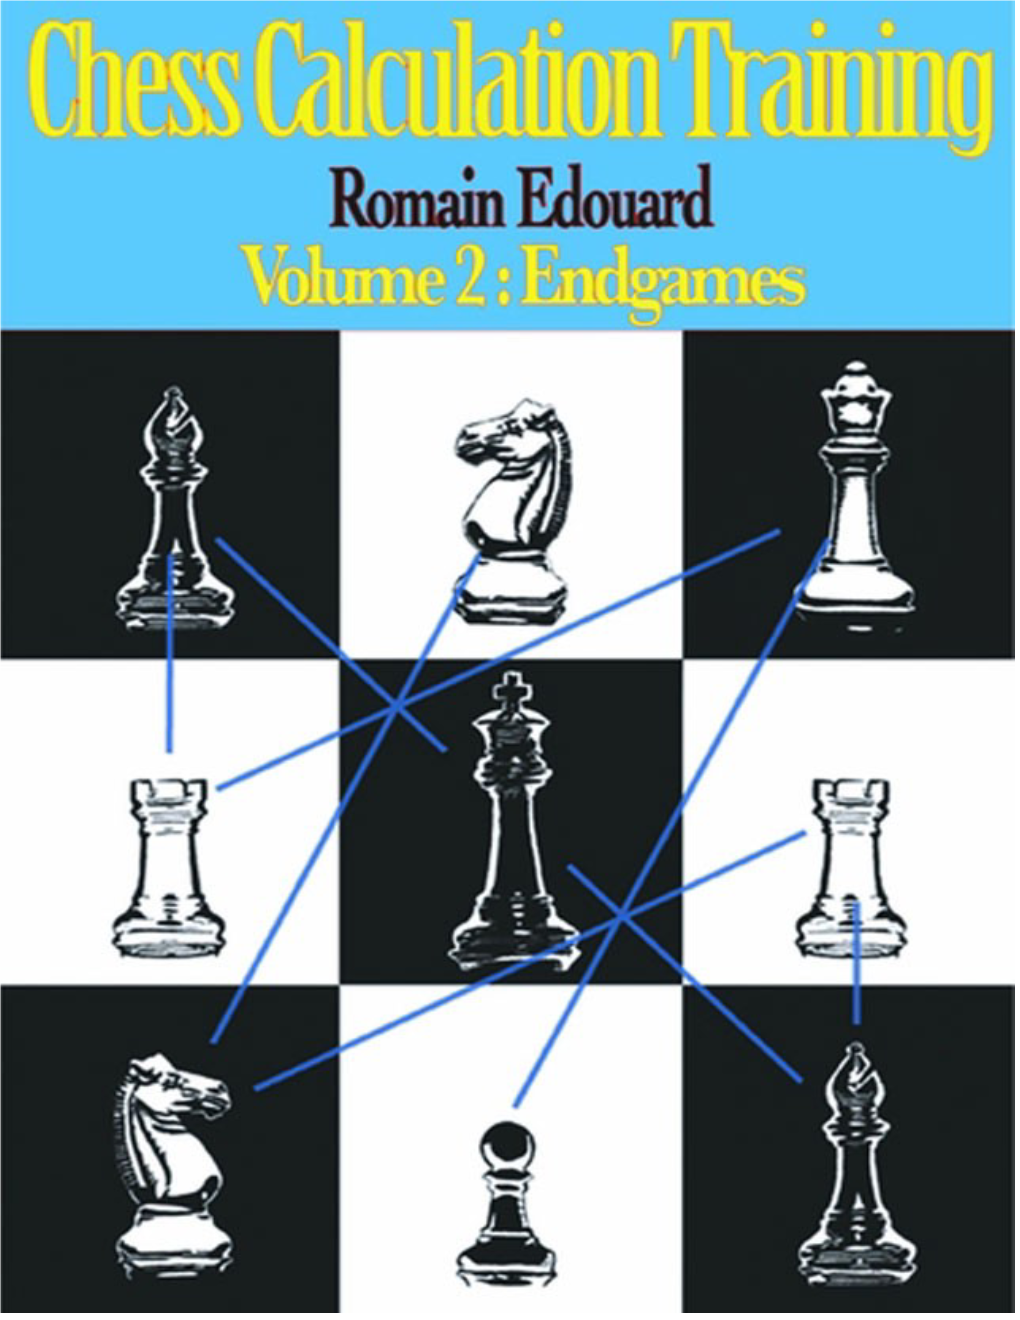 Chess Calculation Training Volume 2 Endgames.Pdf